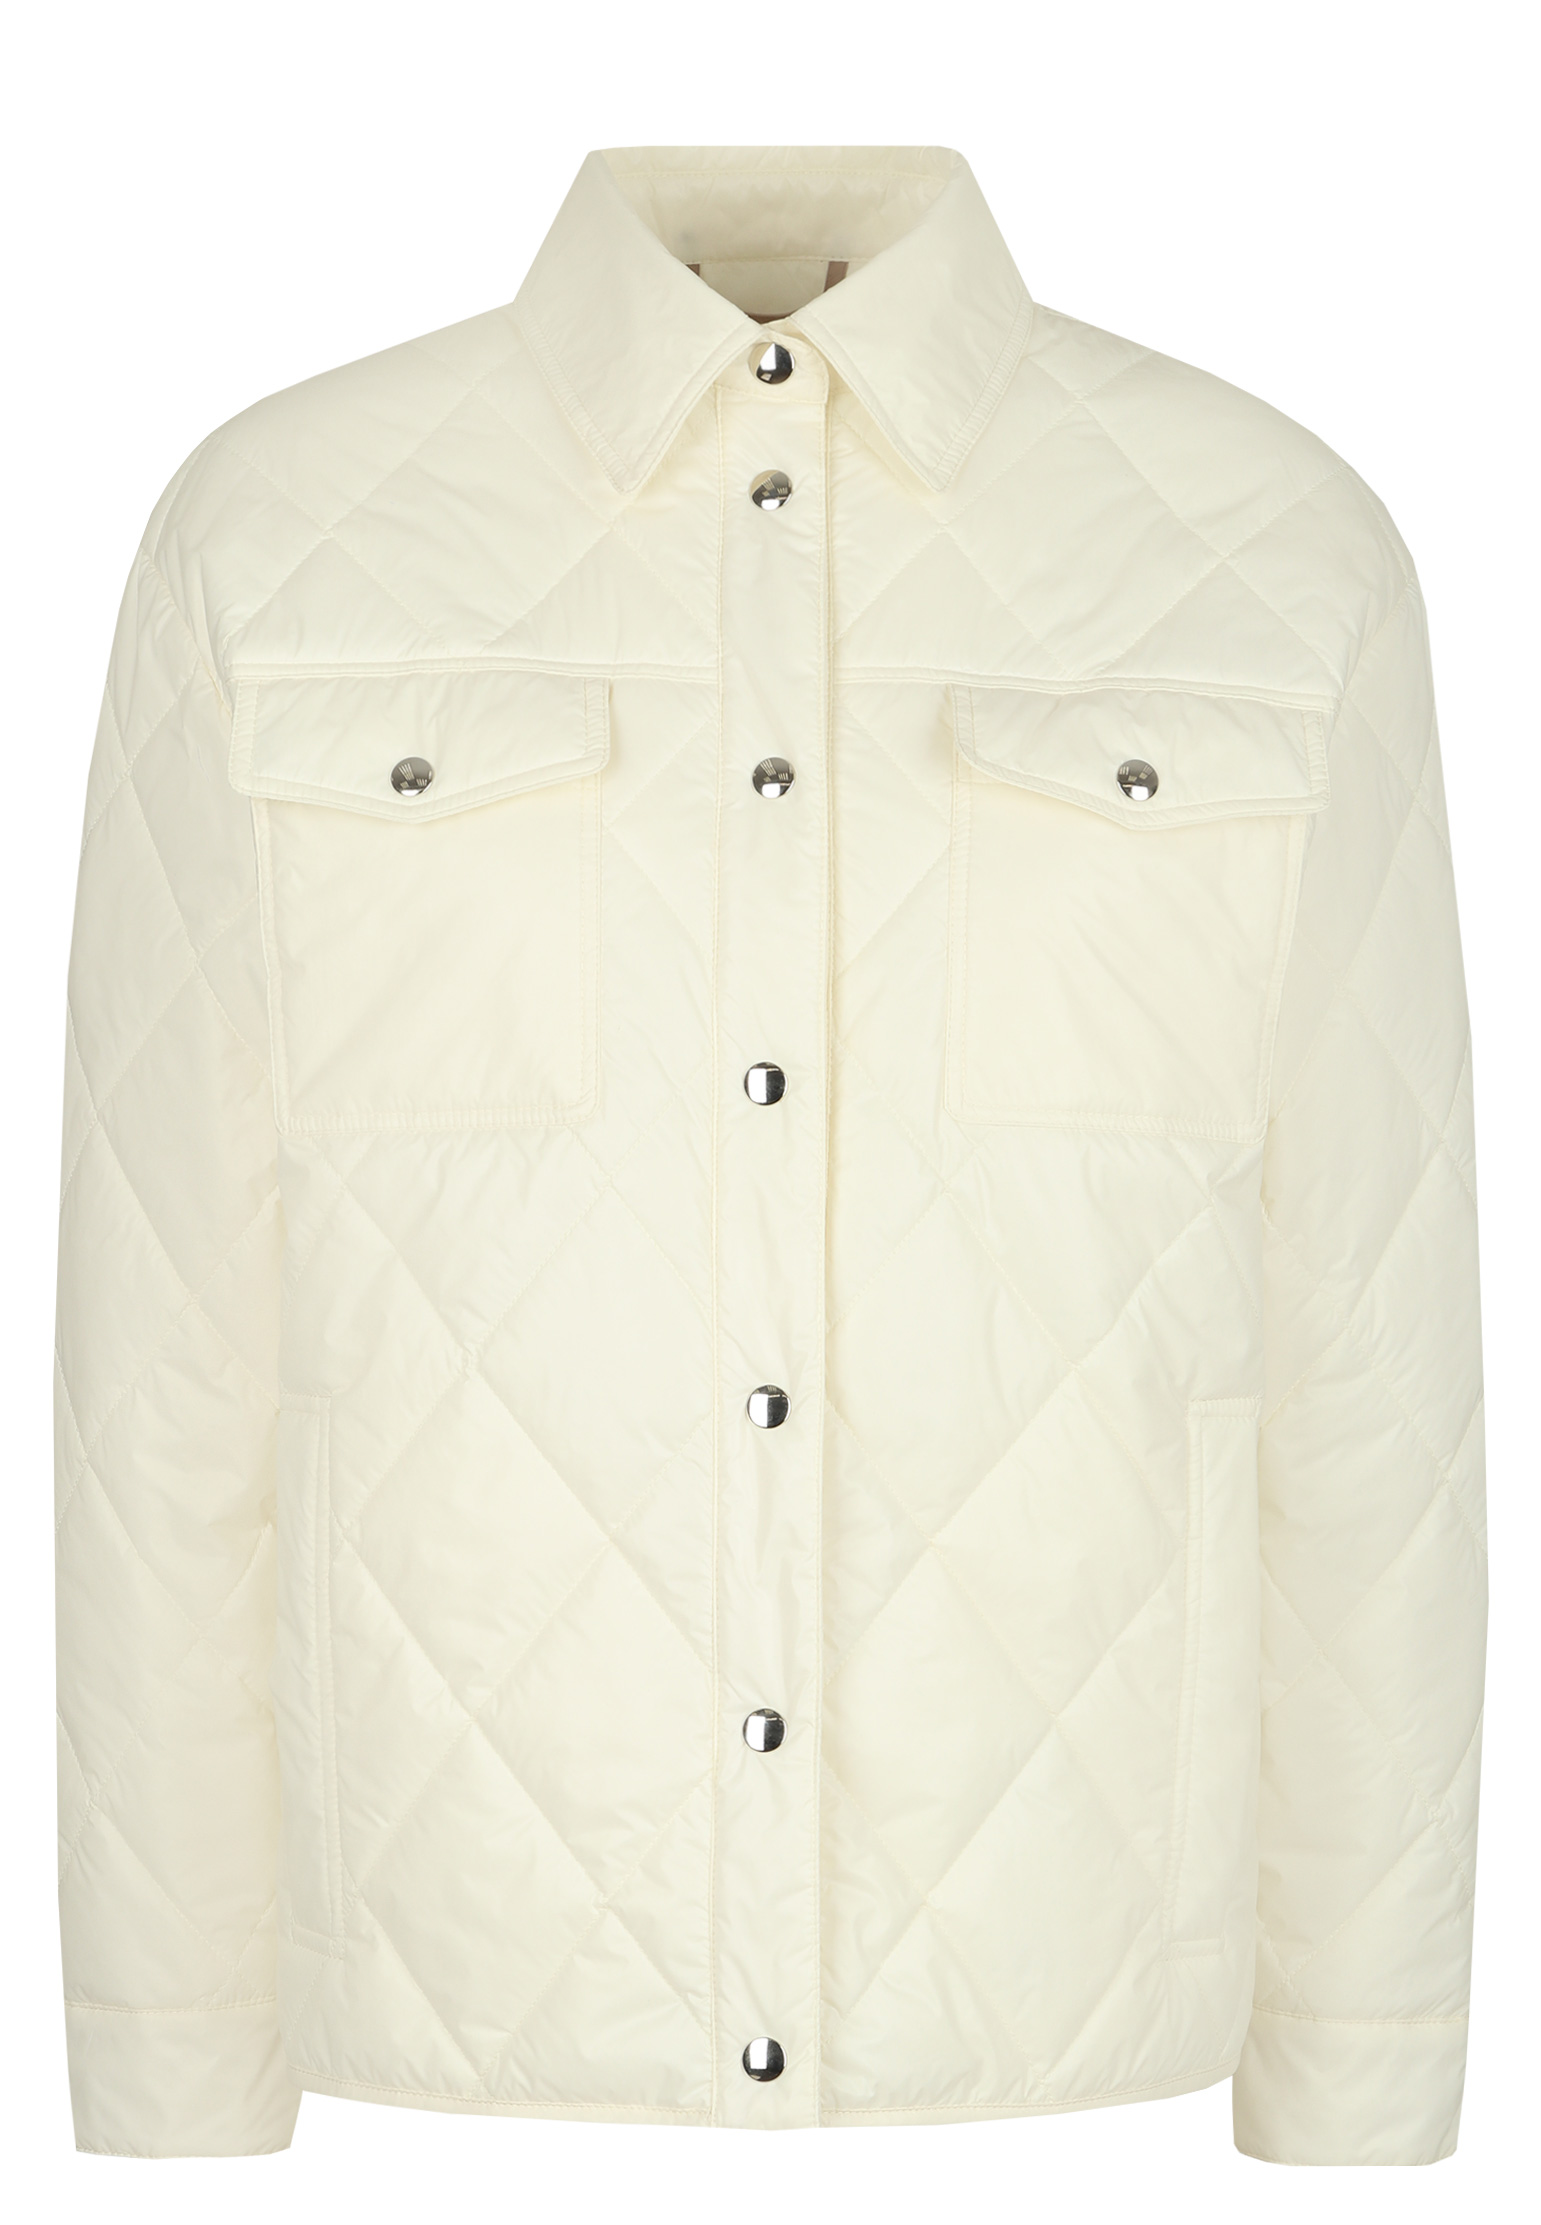 Куртка PESERICO EASY Белый, размер 46 154728 - фото 1